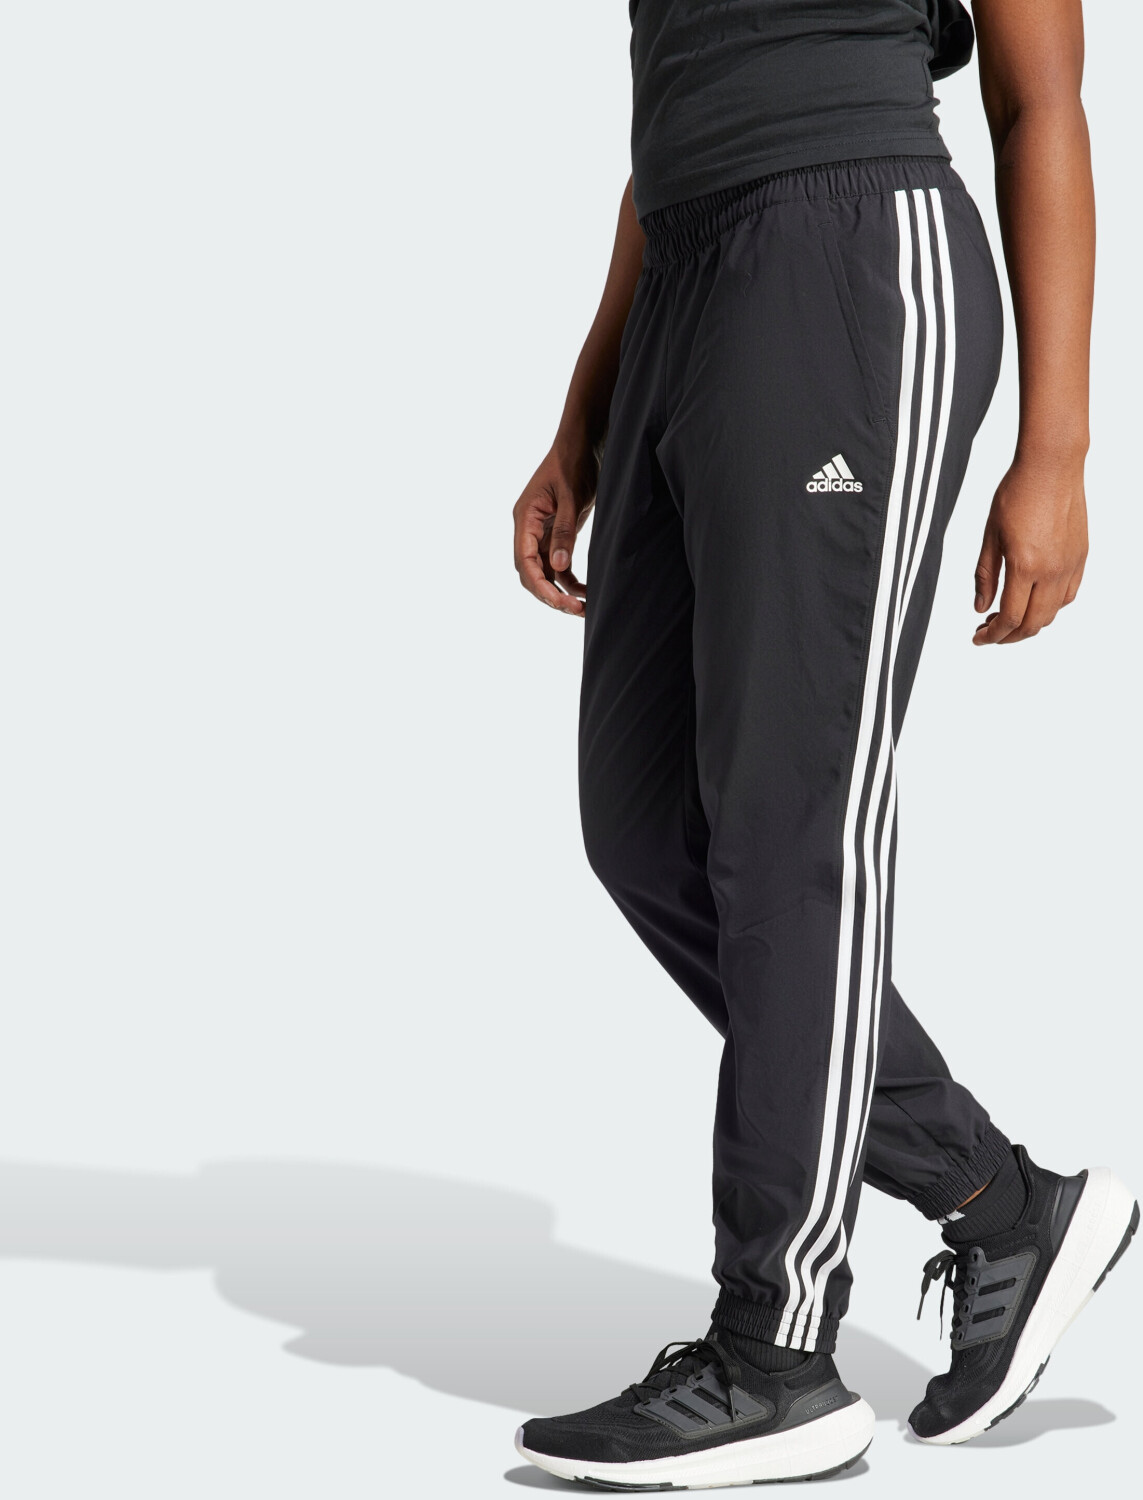 Adidas Woman TRAINICONS 3-Stripes Woven Pants black (H59081) ab 37,49 € |  Preisvergleich bei